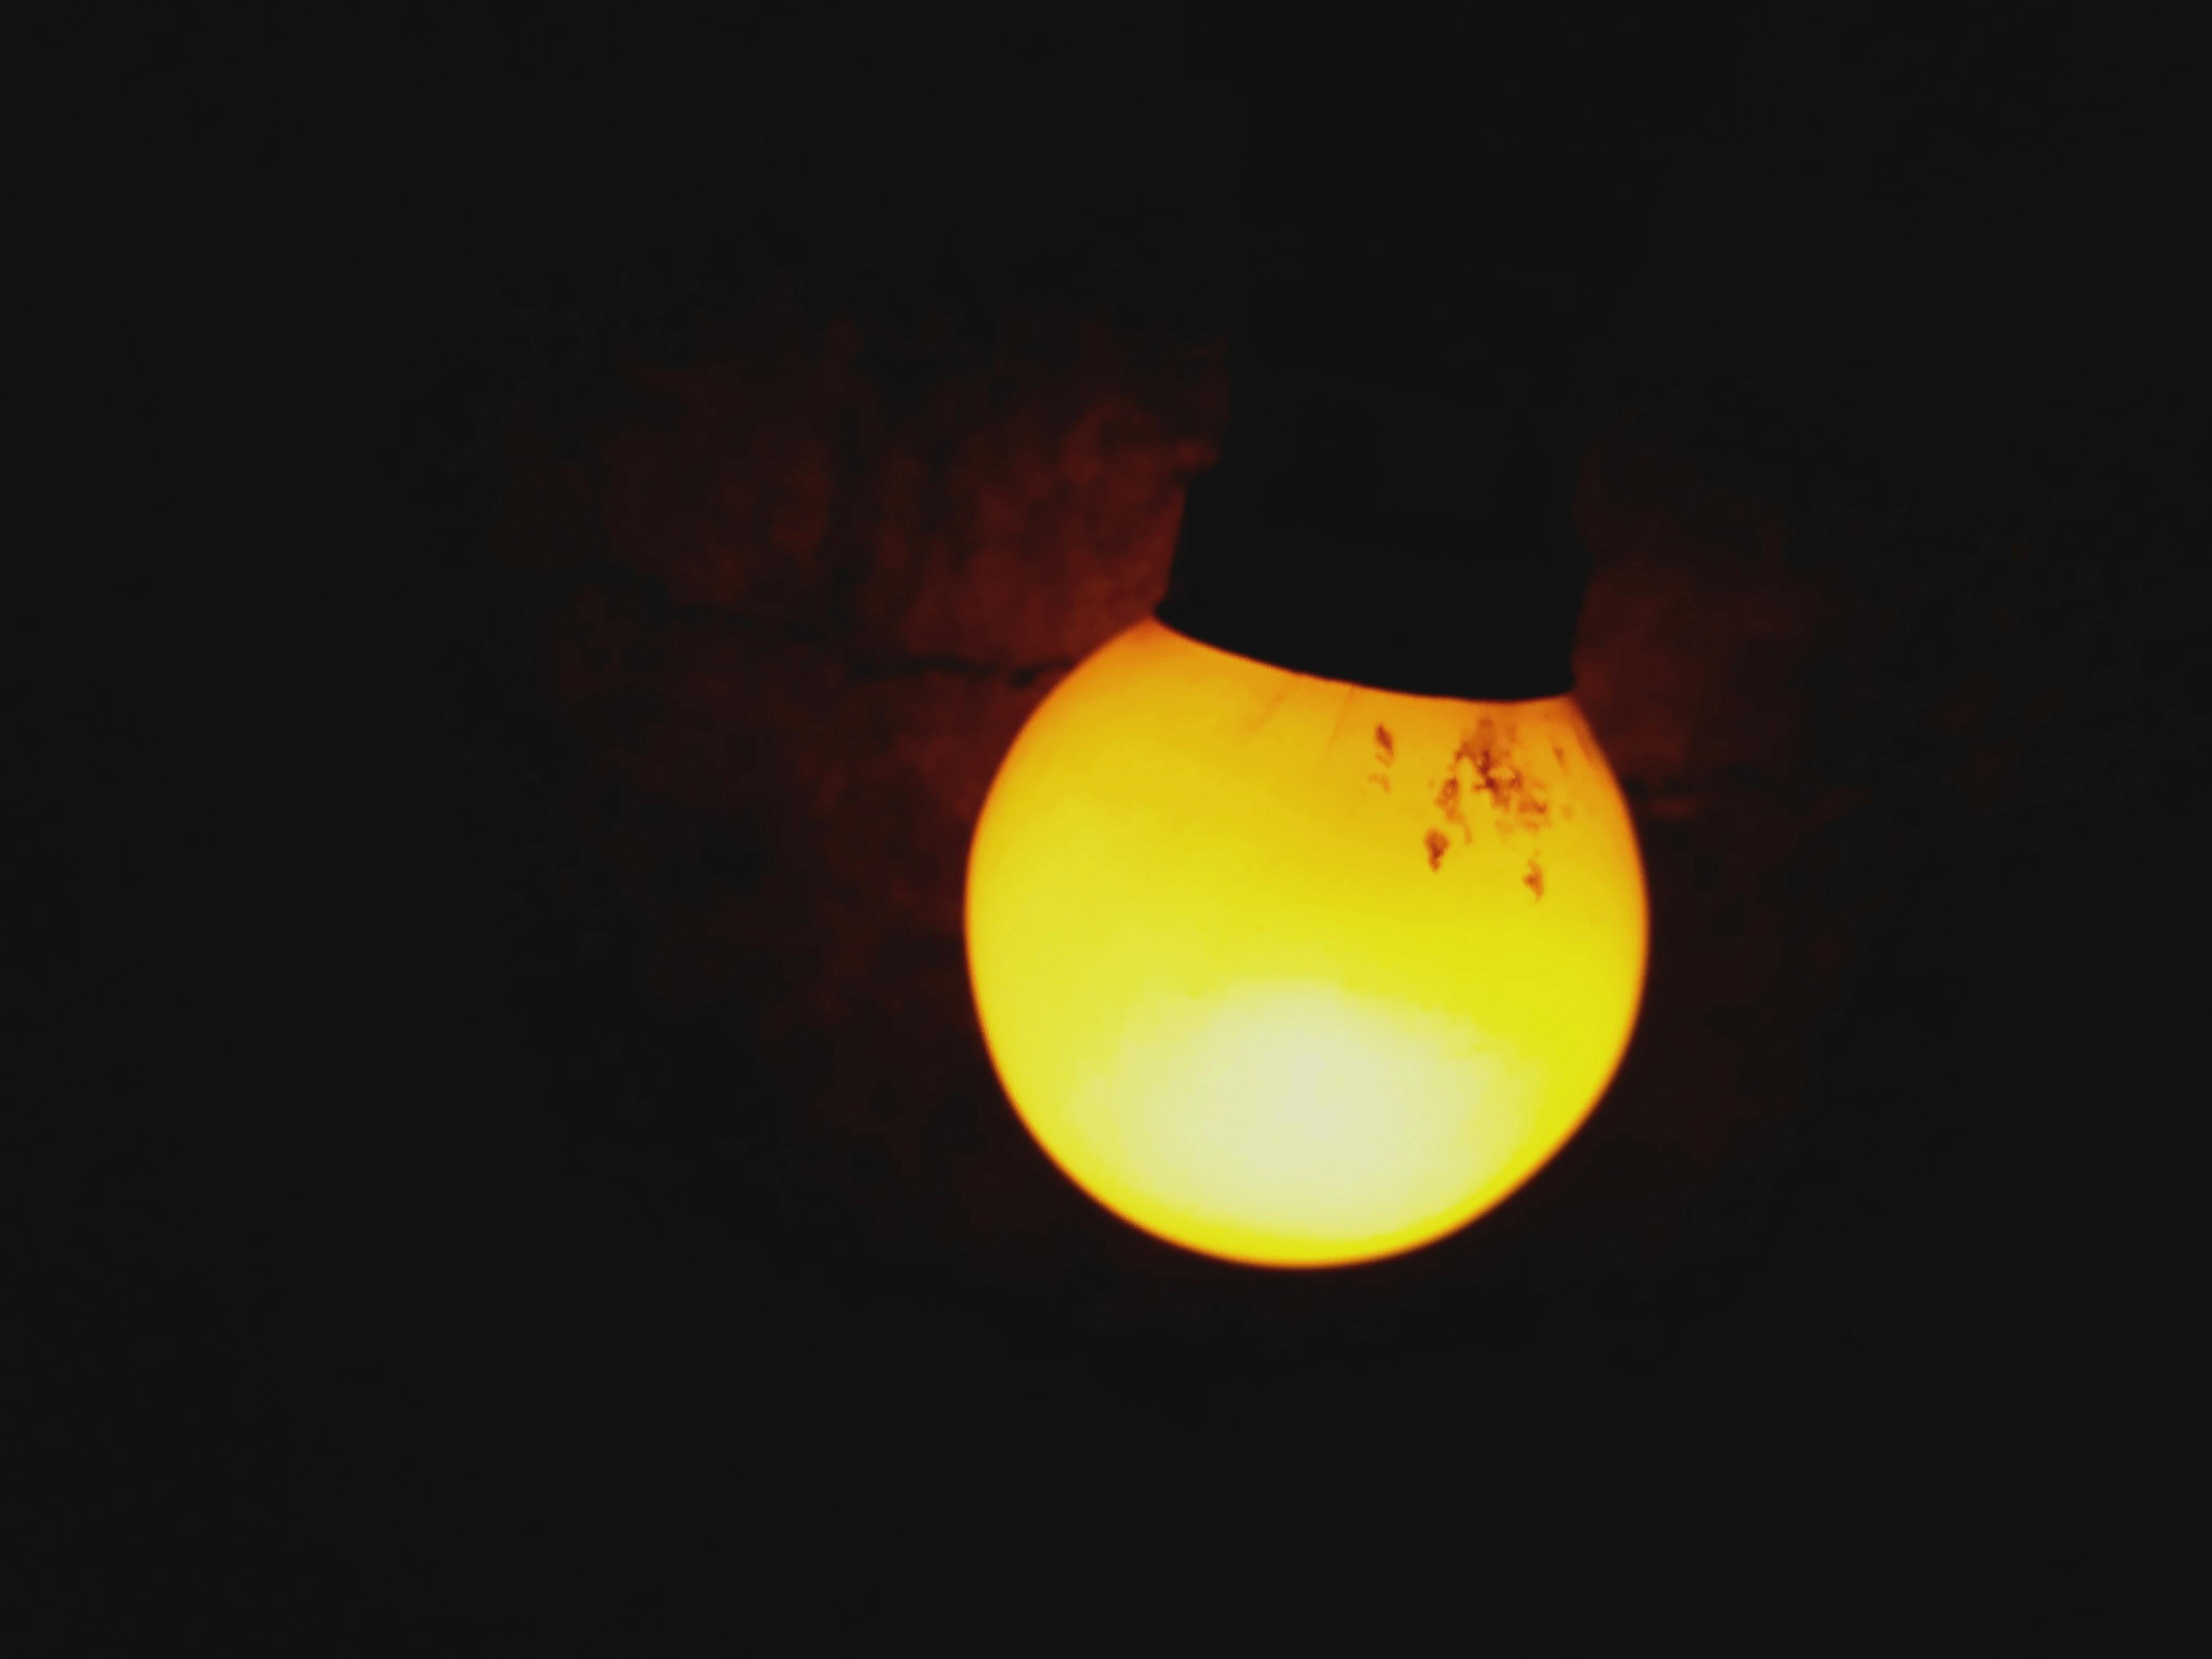 Free stock photo of bulb, Diwali, electric light